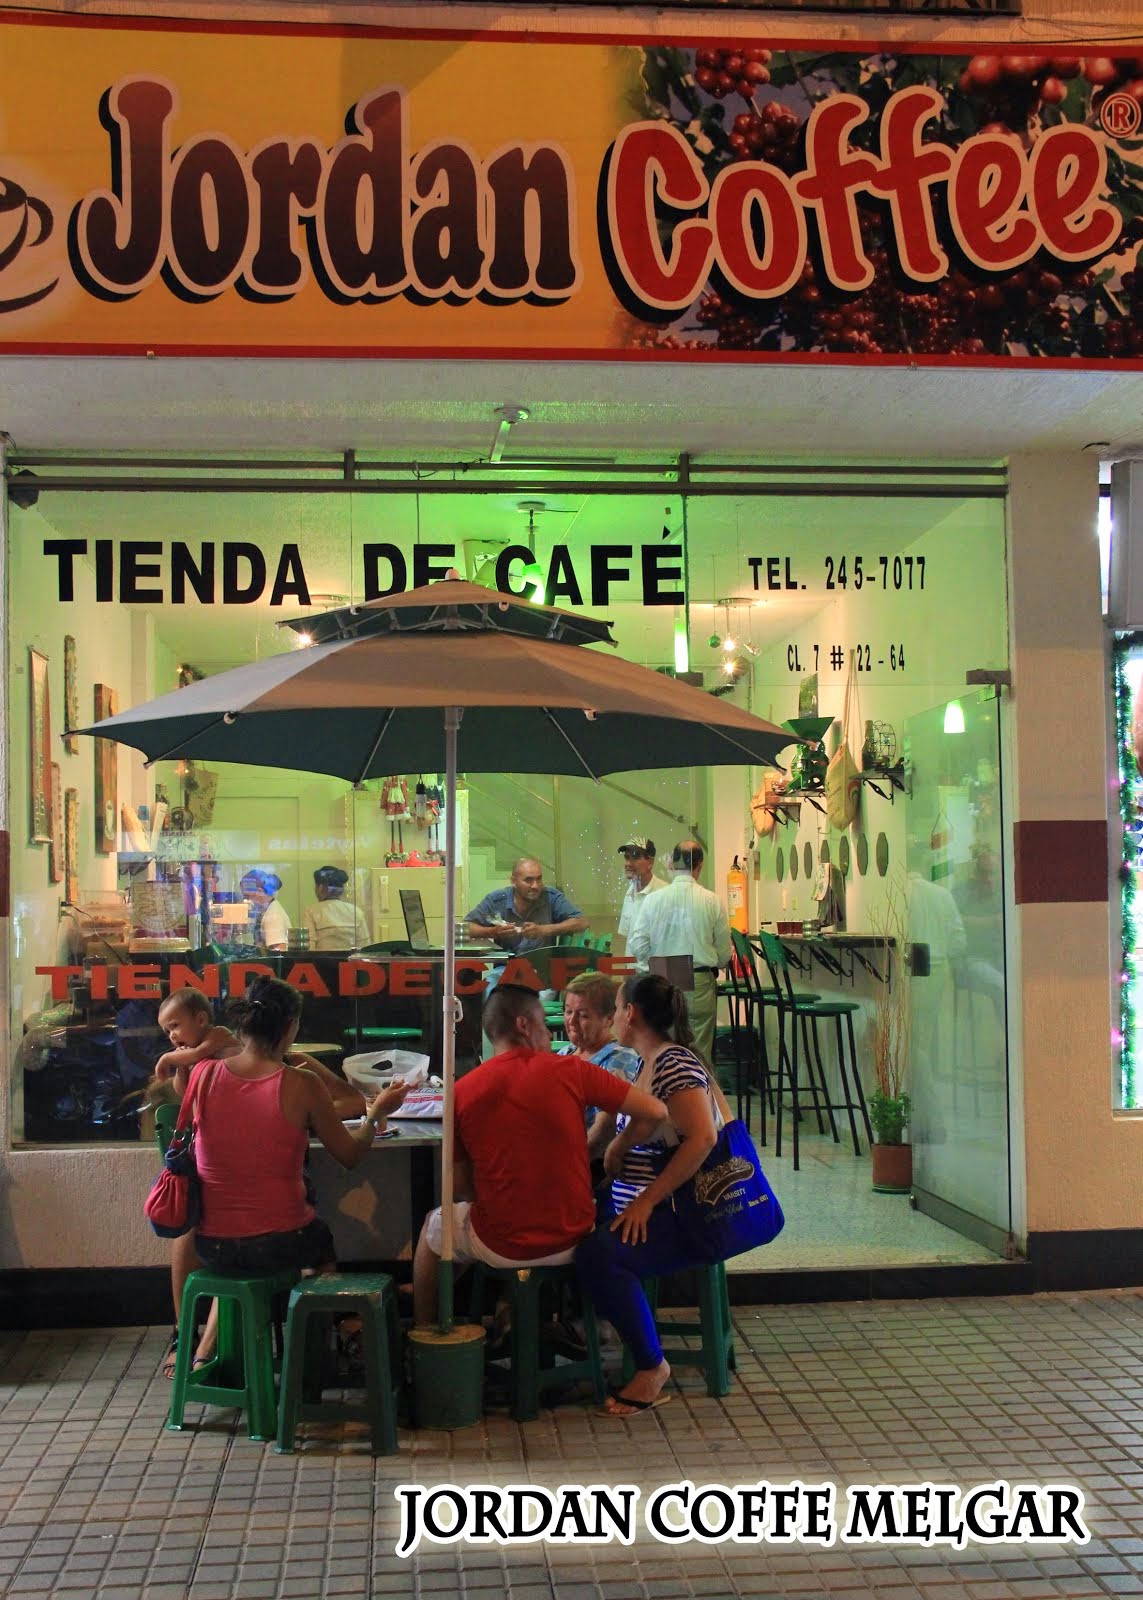 TIENDA DE CAFÉ "JORDAN COFFEE" DE MELGAR TOLIMA.